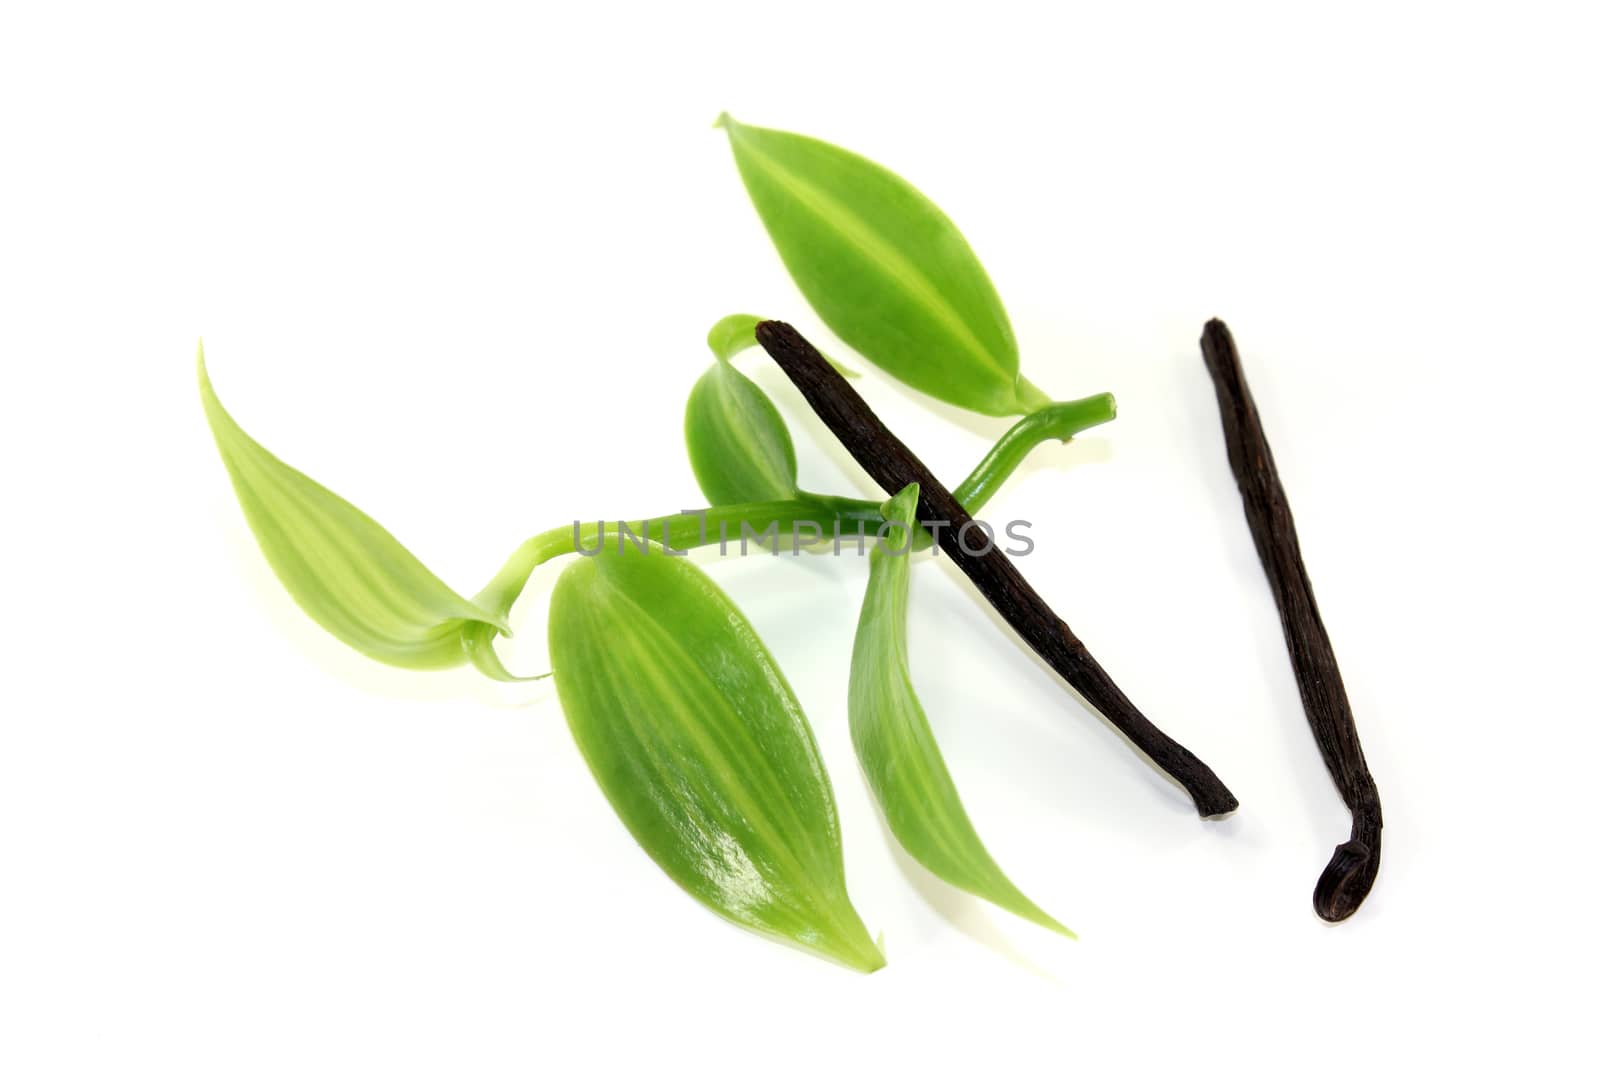 Vanilla sticks with green vanilla leaves on a light background